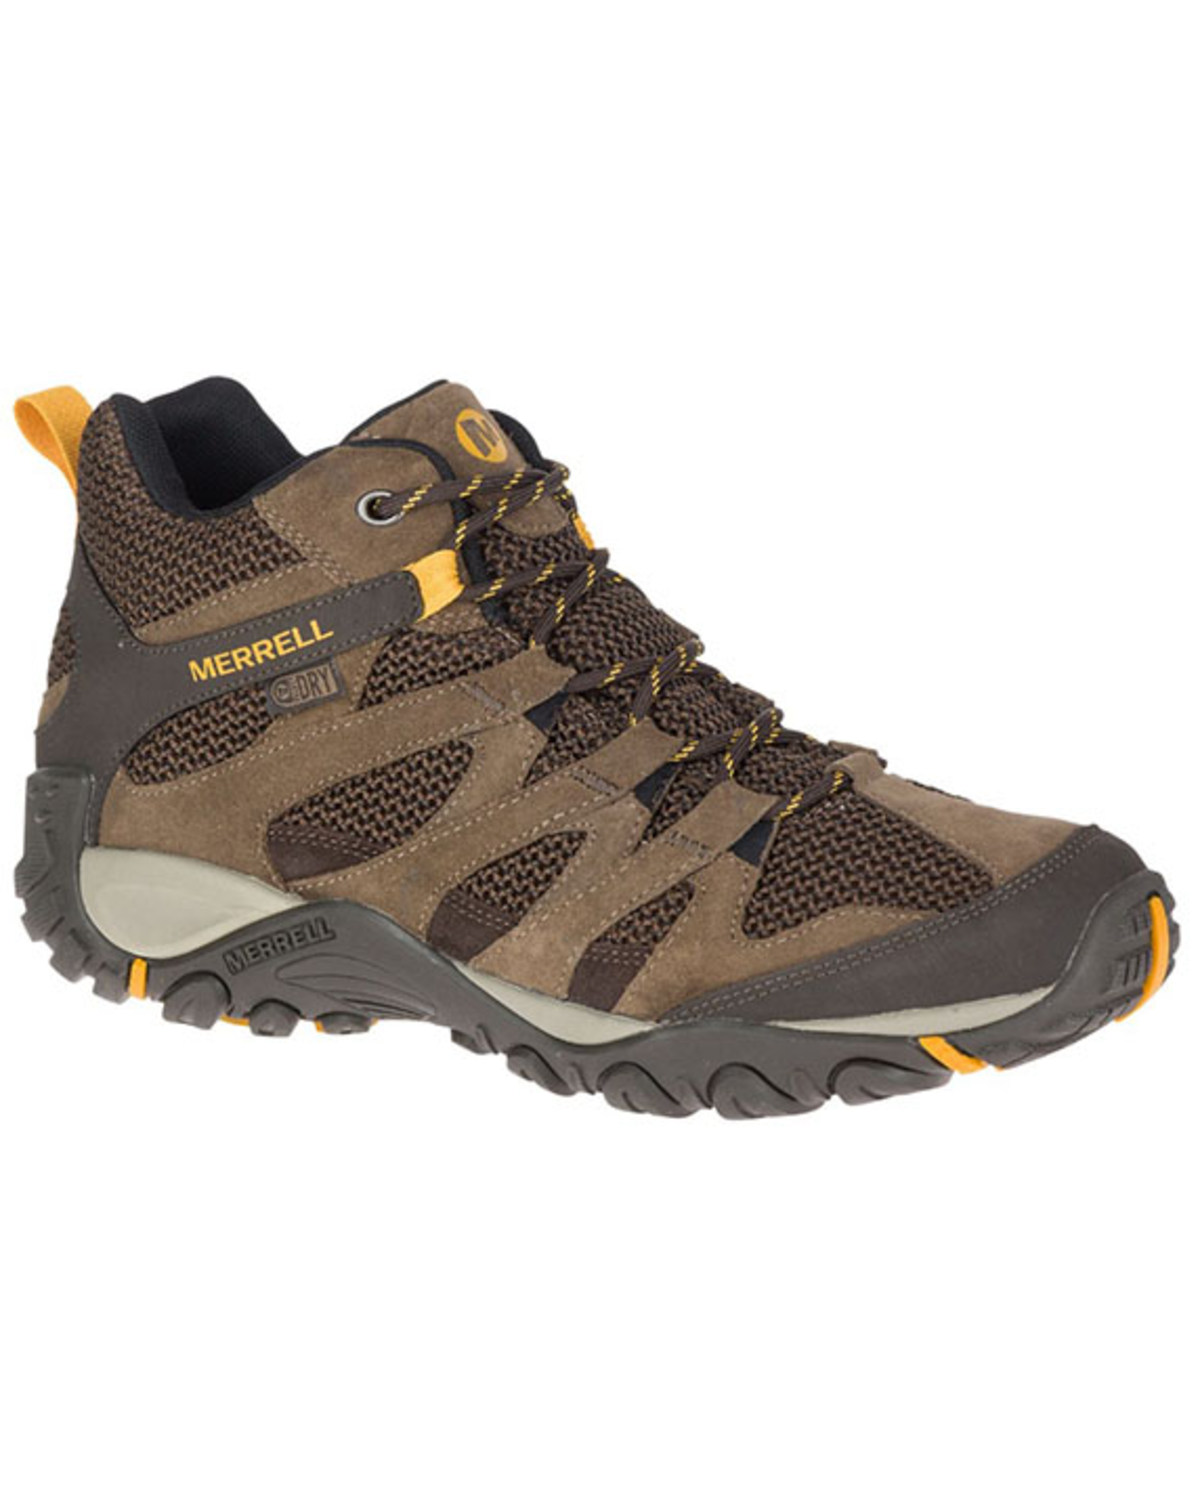 Merrell Men's Alverstone Waterproof Hiking Boots - Soft Toe